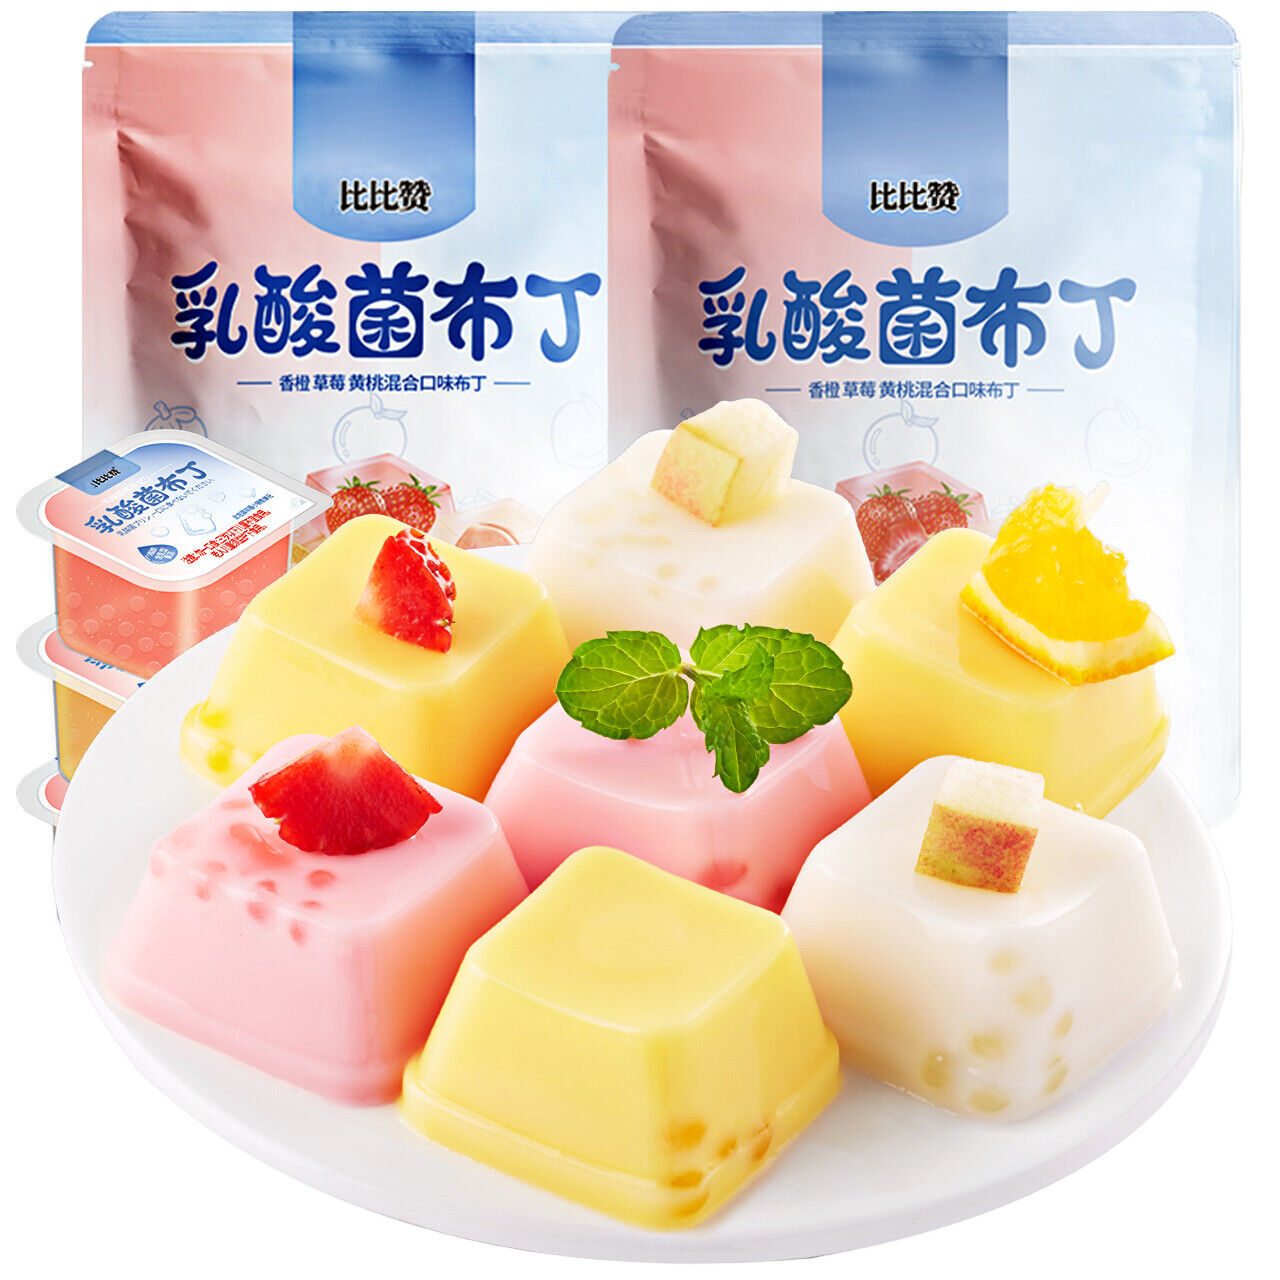 Bibizan Mixed Flavor lactobacillus Pudding Jelly 400G 比比赞乳酸菌布丁果冻 清凉小零食袋装小吃货休闲食品